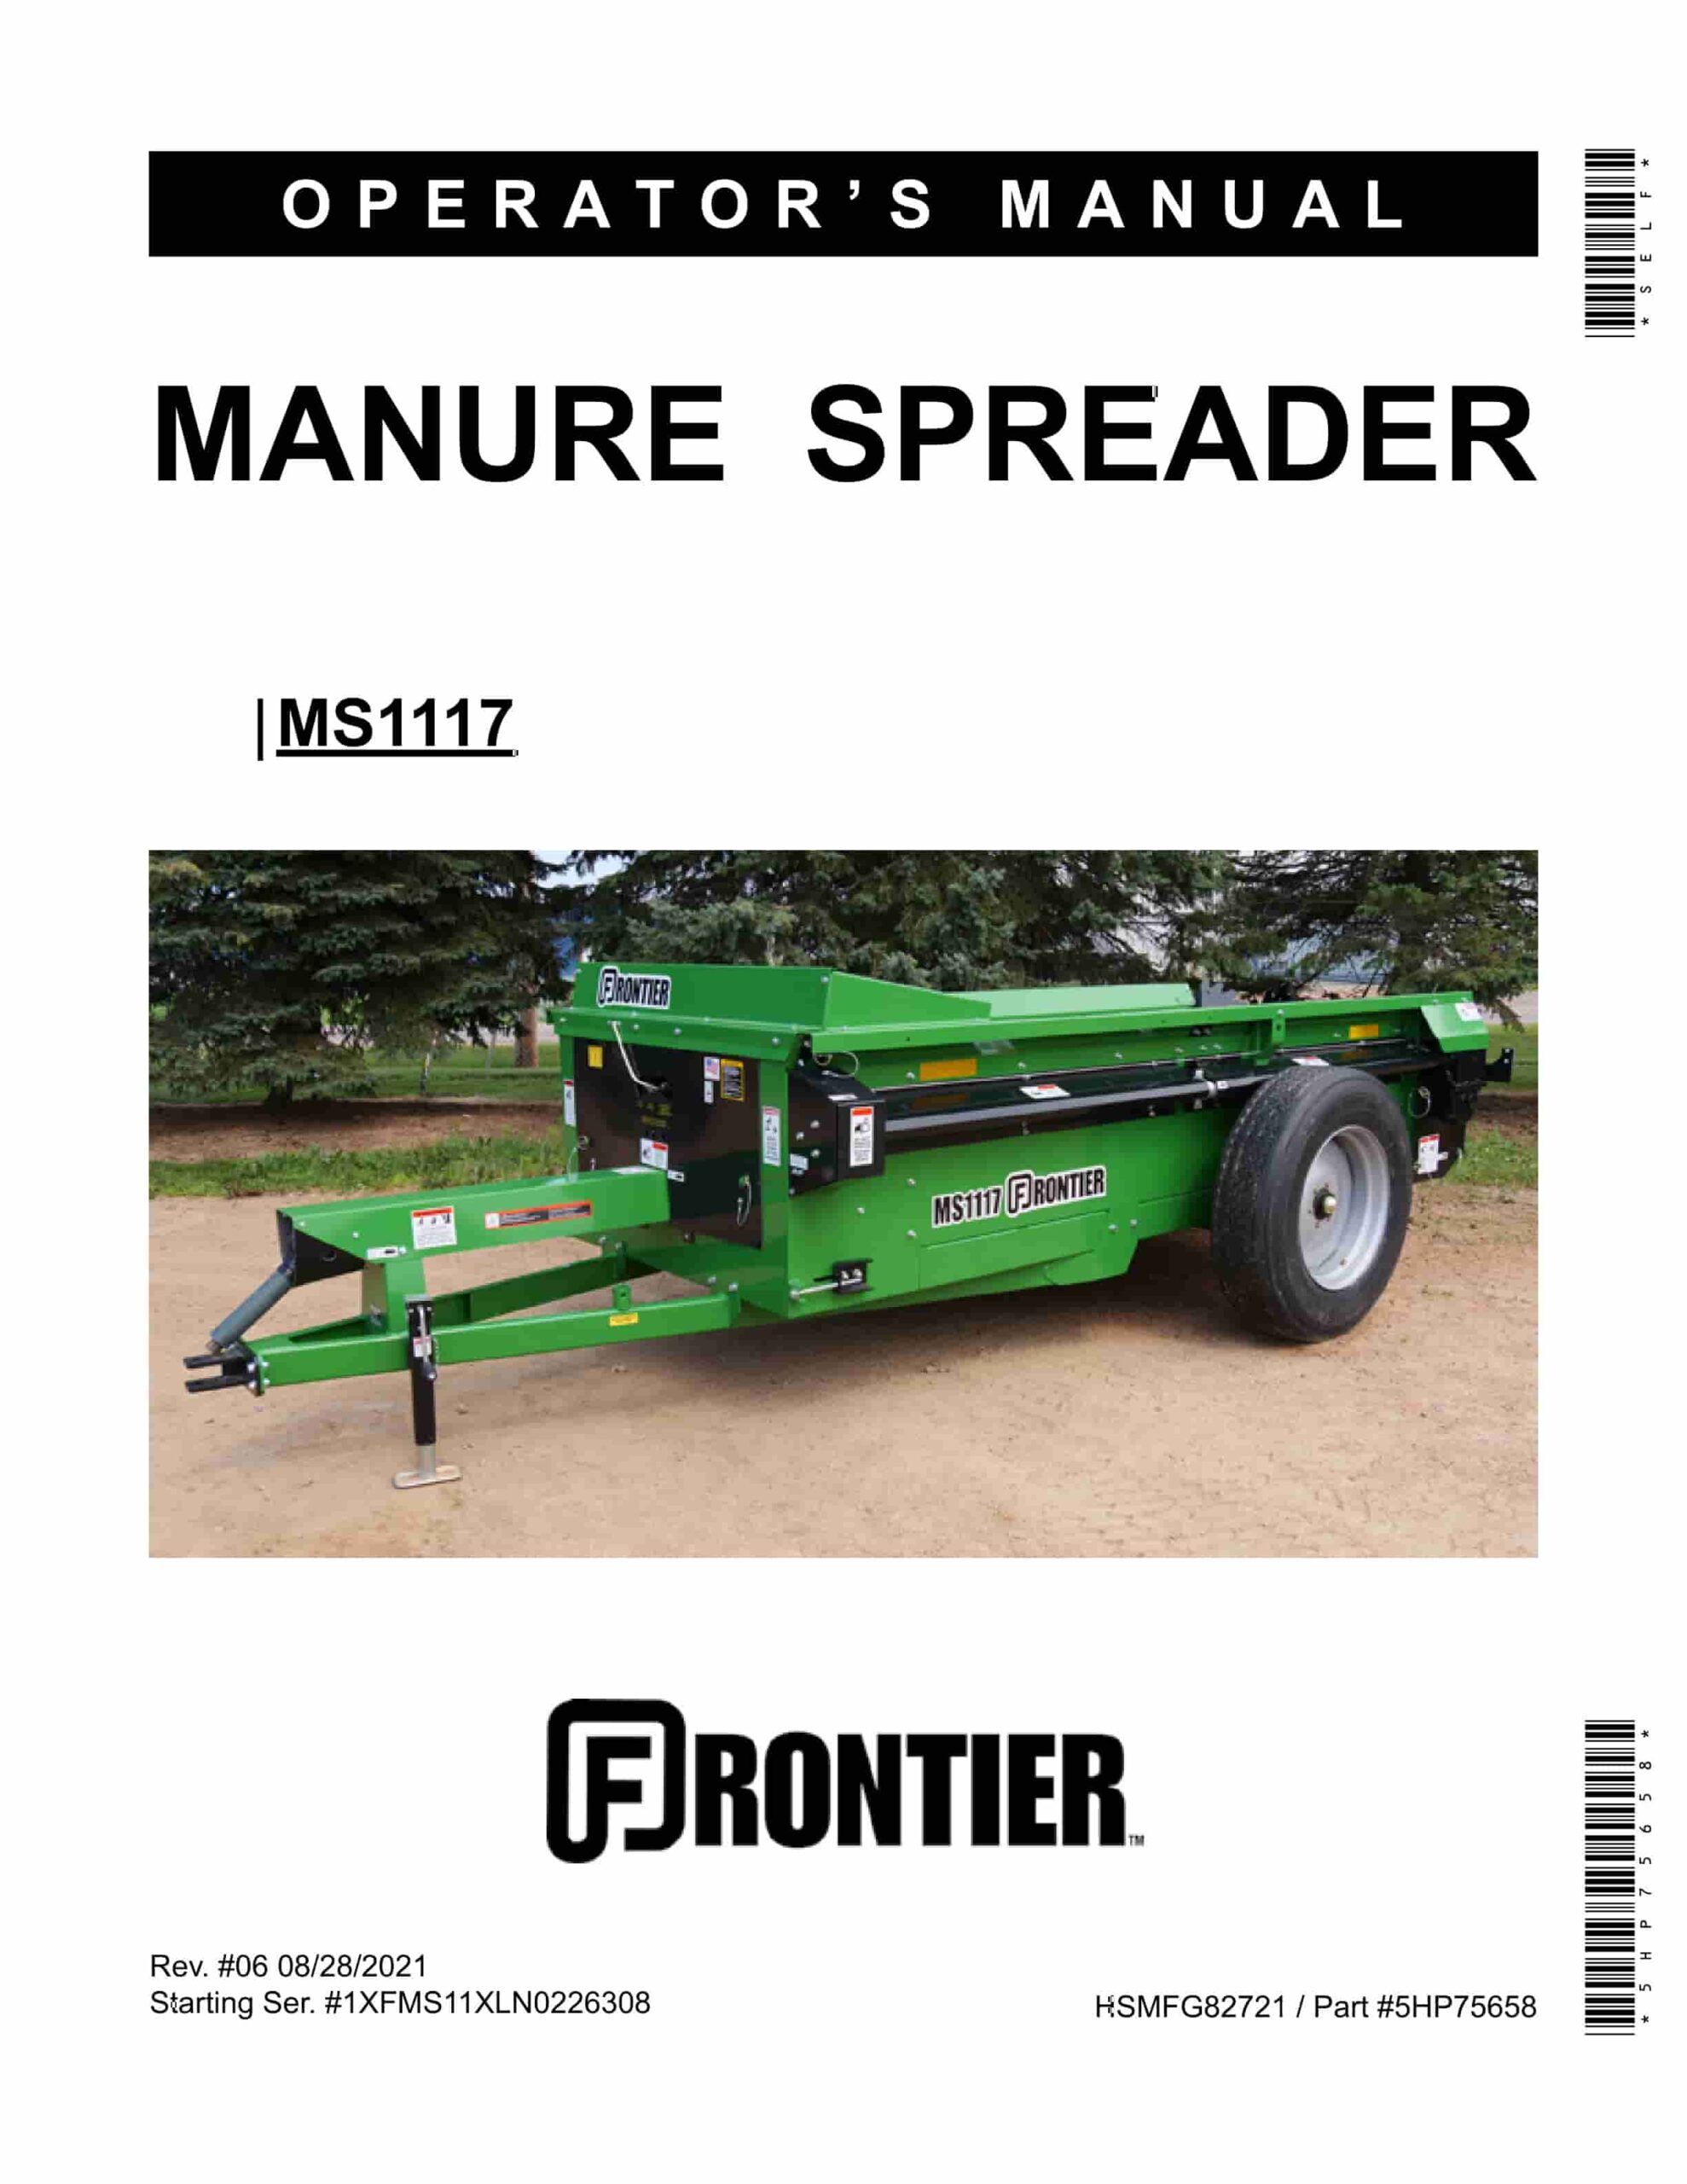 John Deere Frontier MS1117 MANURE SPREADER Operator Manual 5HP75658-1